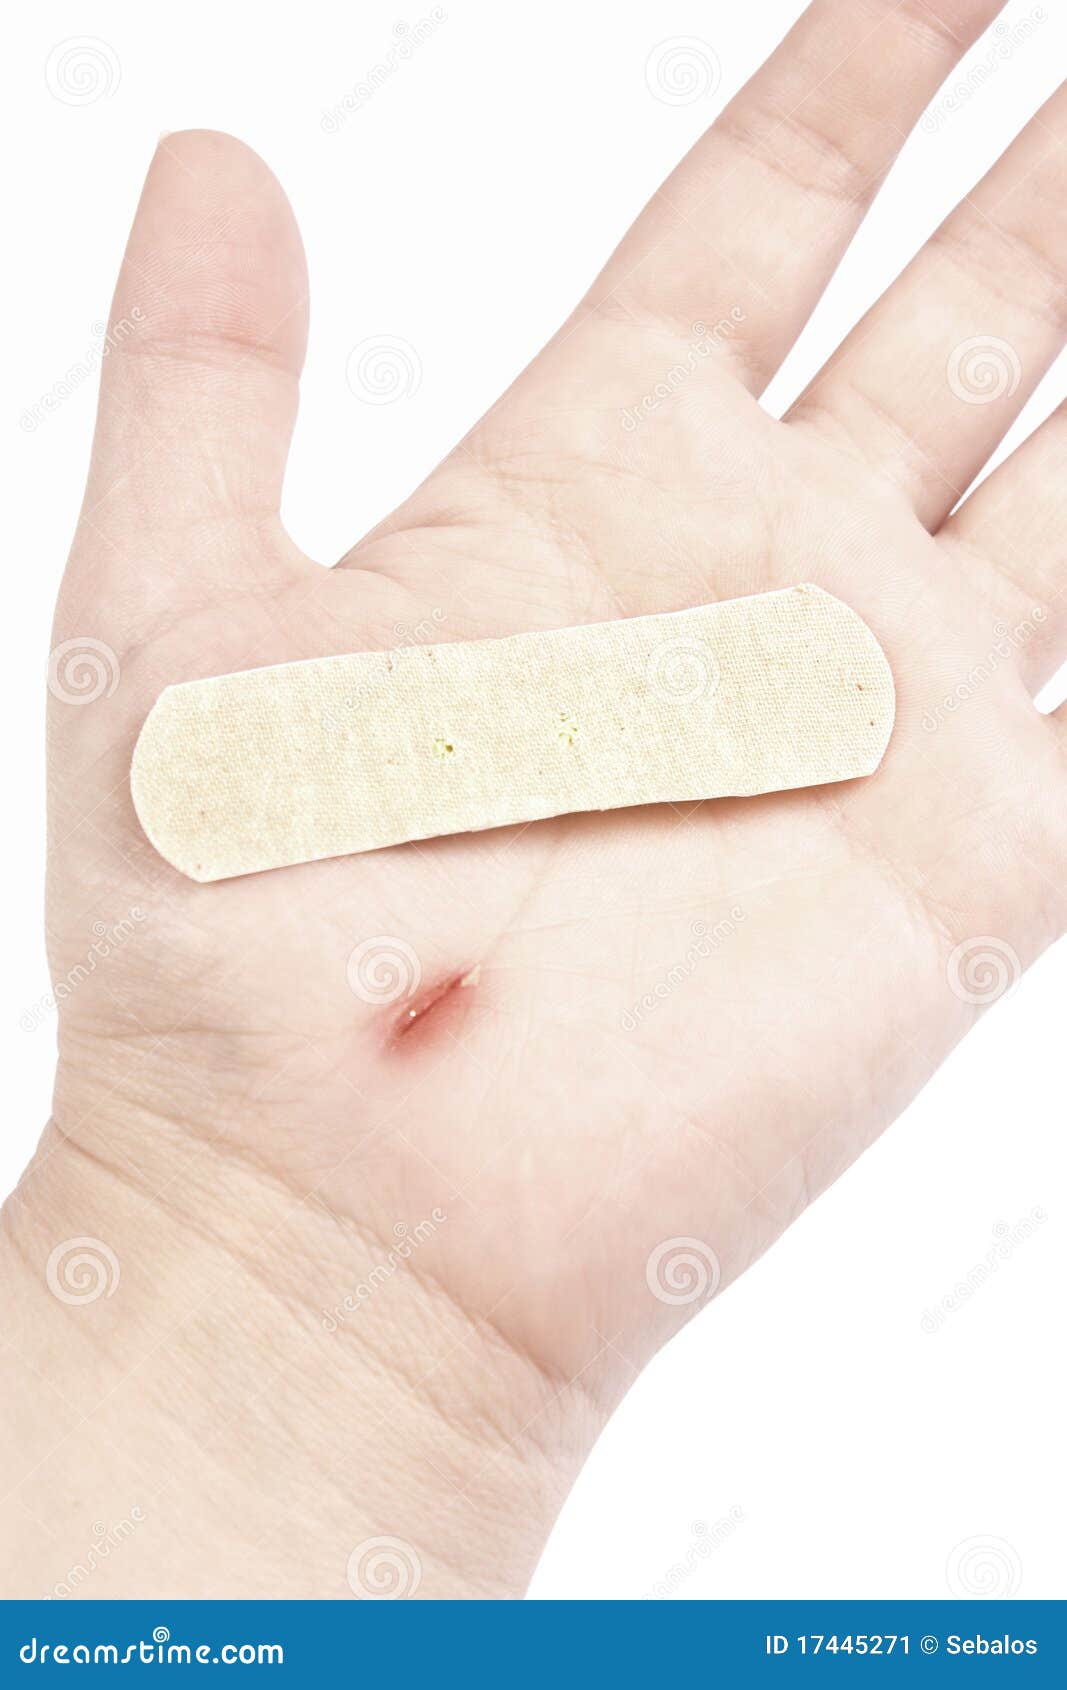 https://thumbs.dreamstime.com/z/cut-hand-bandage-17445271.jpg